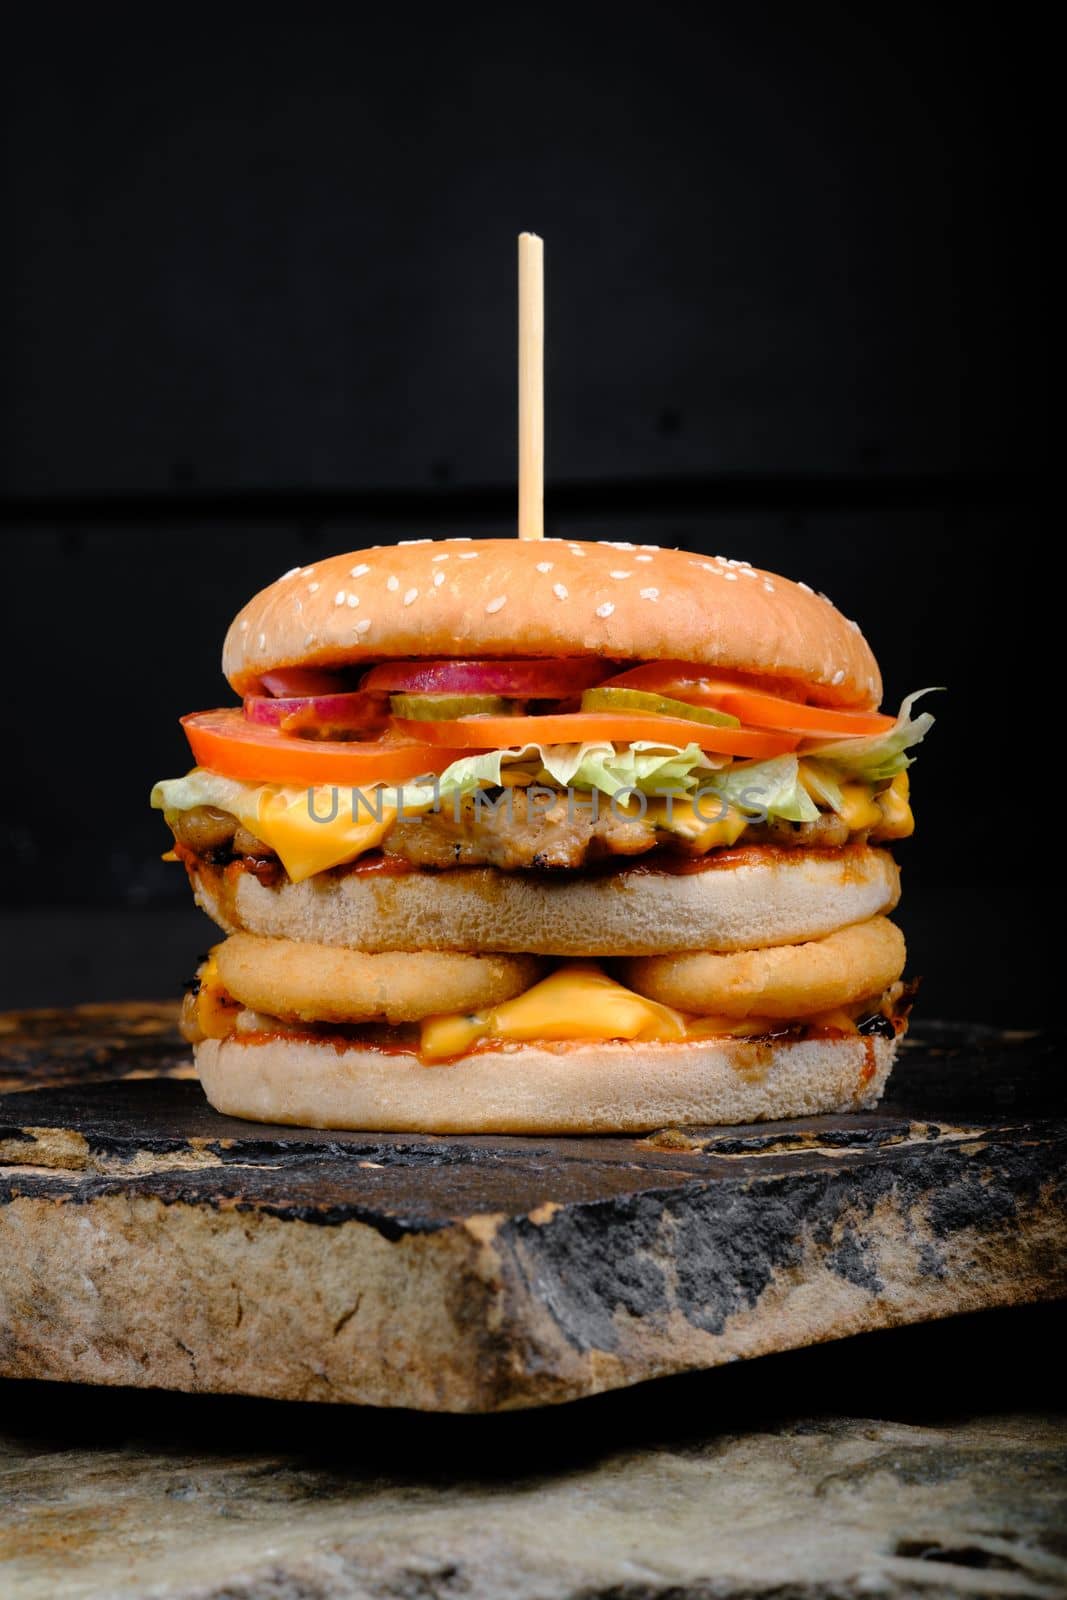 Rustic tasty Burger on Stone Background by Symonenko